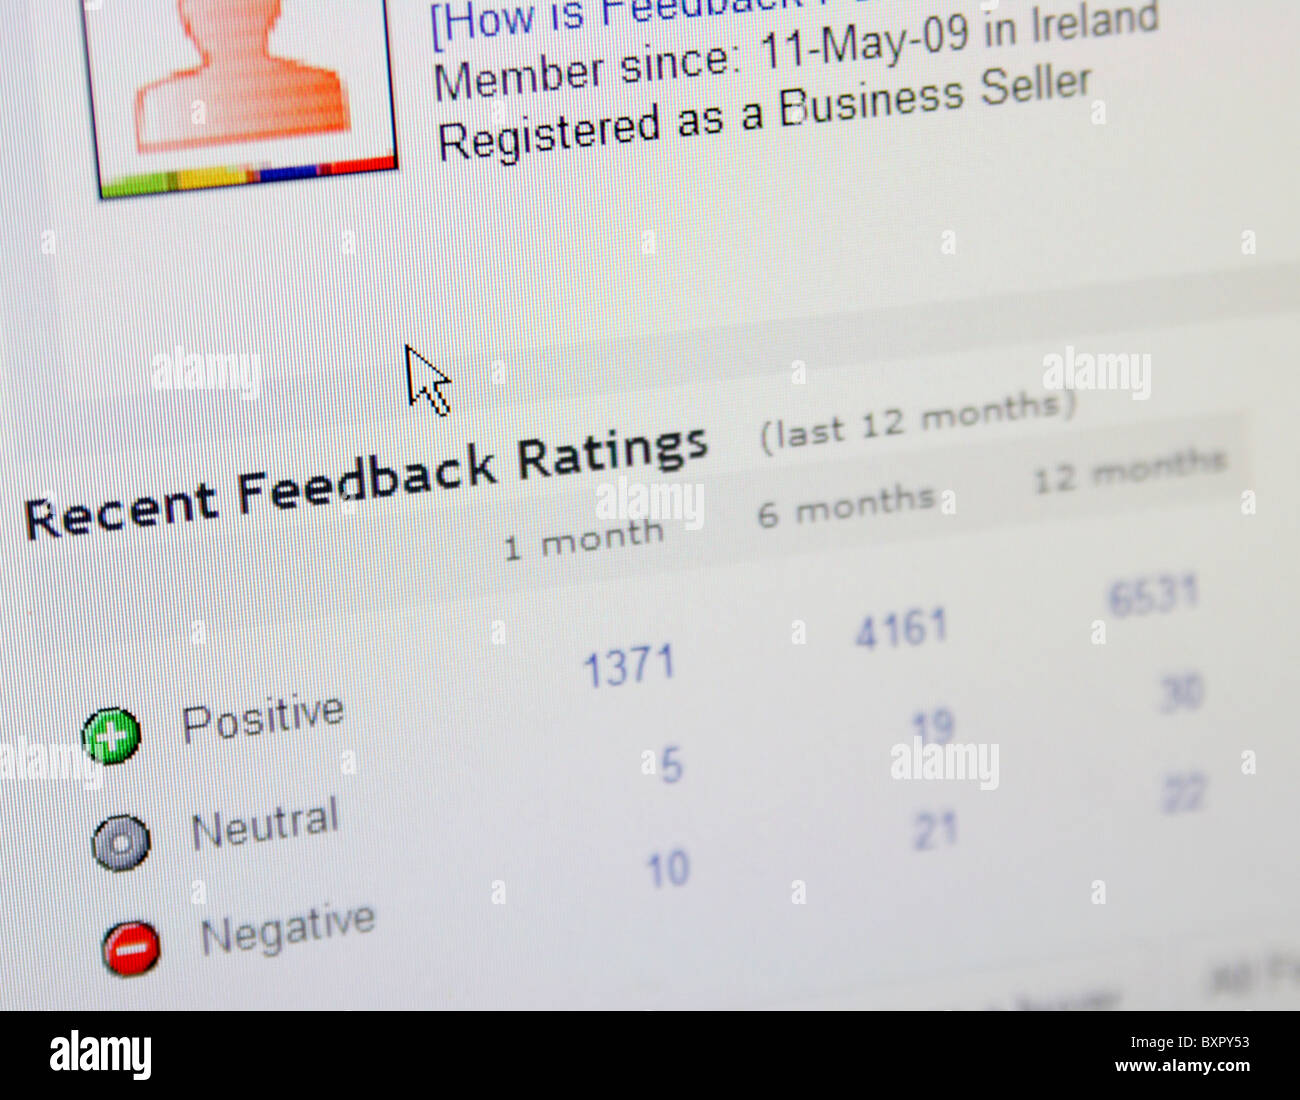 eBay feedback rating Stock Photo